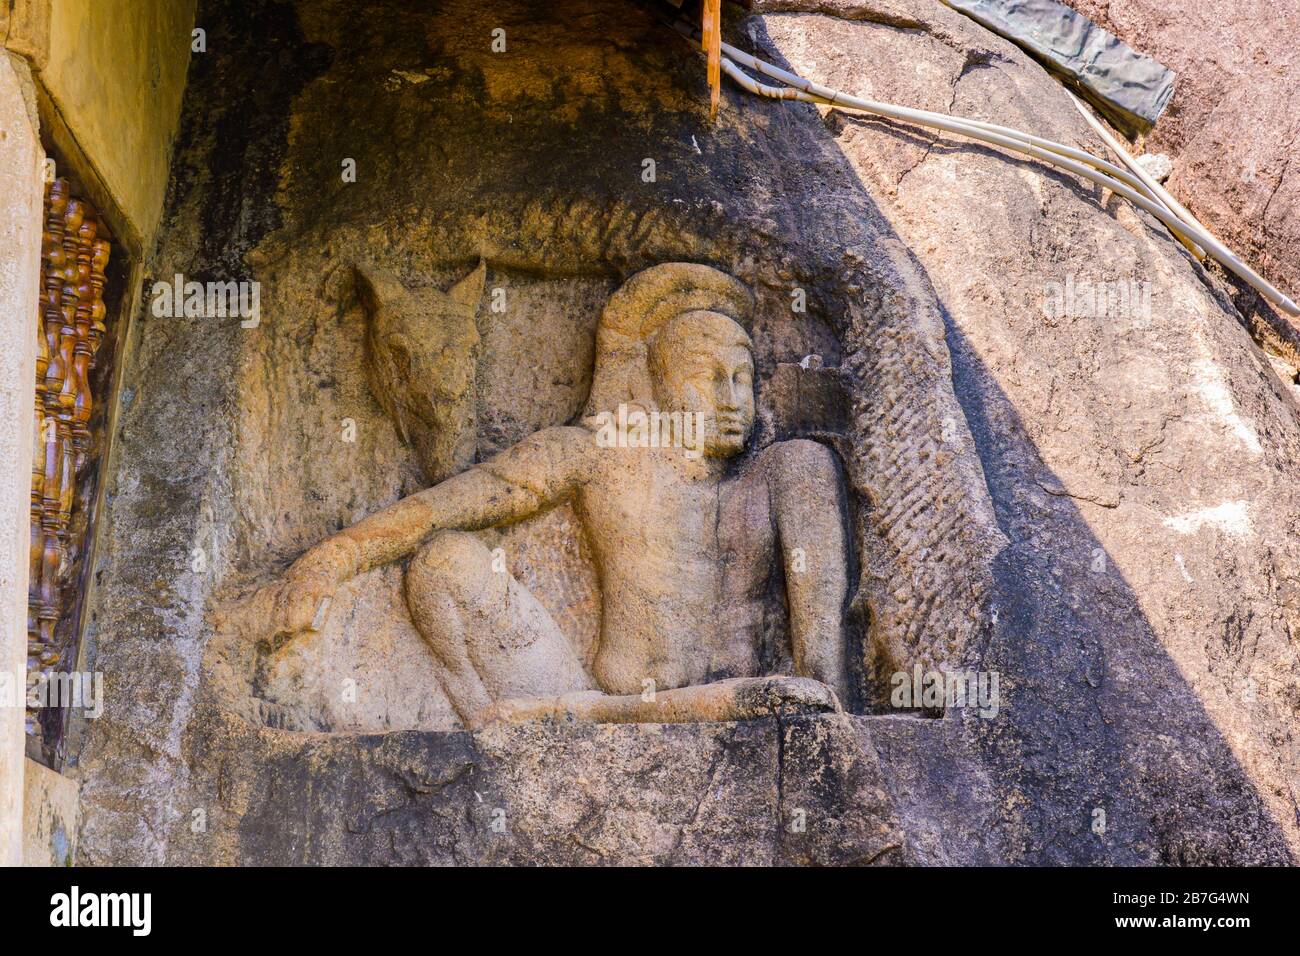 Sri Lanka Anuradhapura Isurumuni Rock Temple Monastery 3 BC built King Devanampiya Tissa sacred shrine stone carved into rock sculpture seated figure Stock Photo